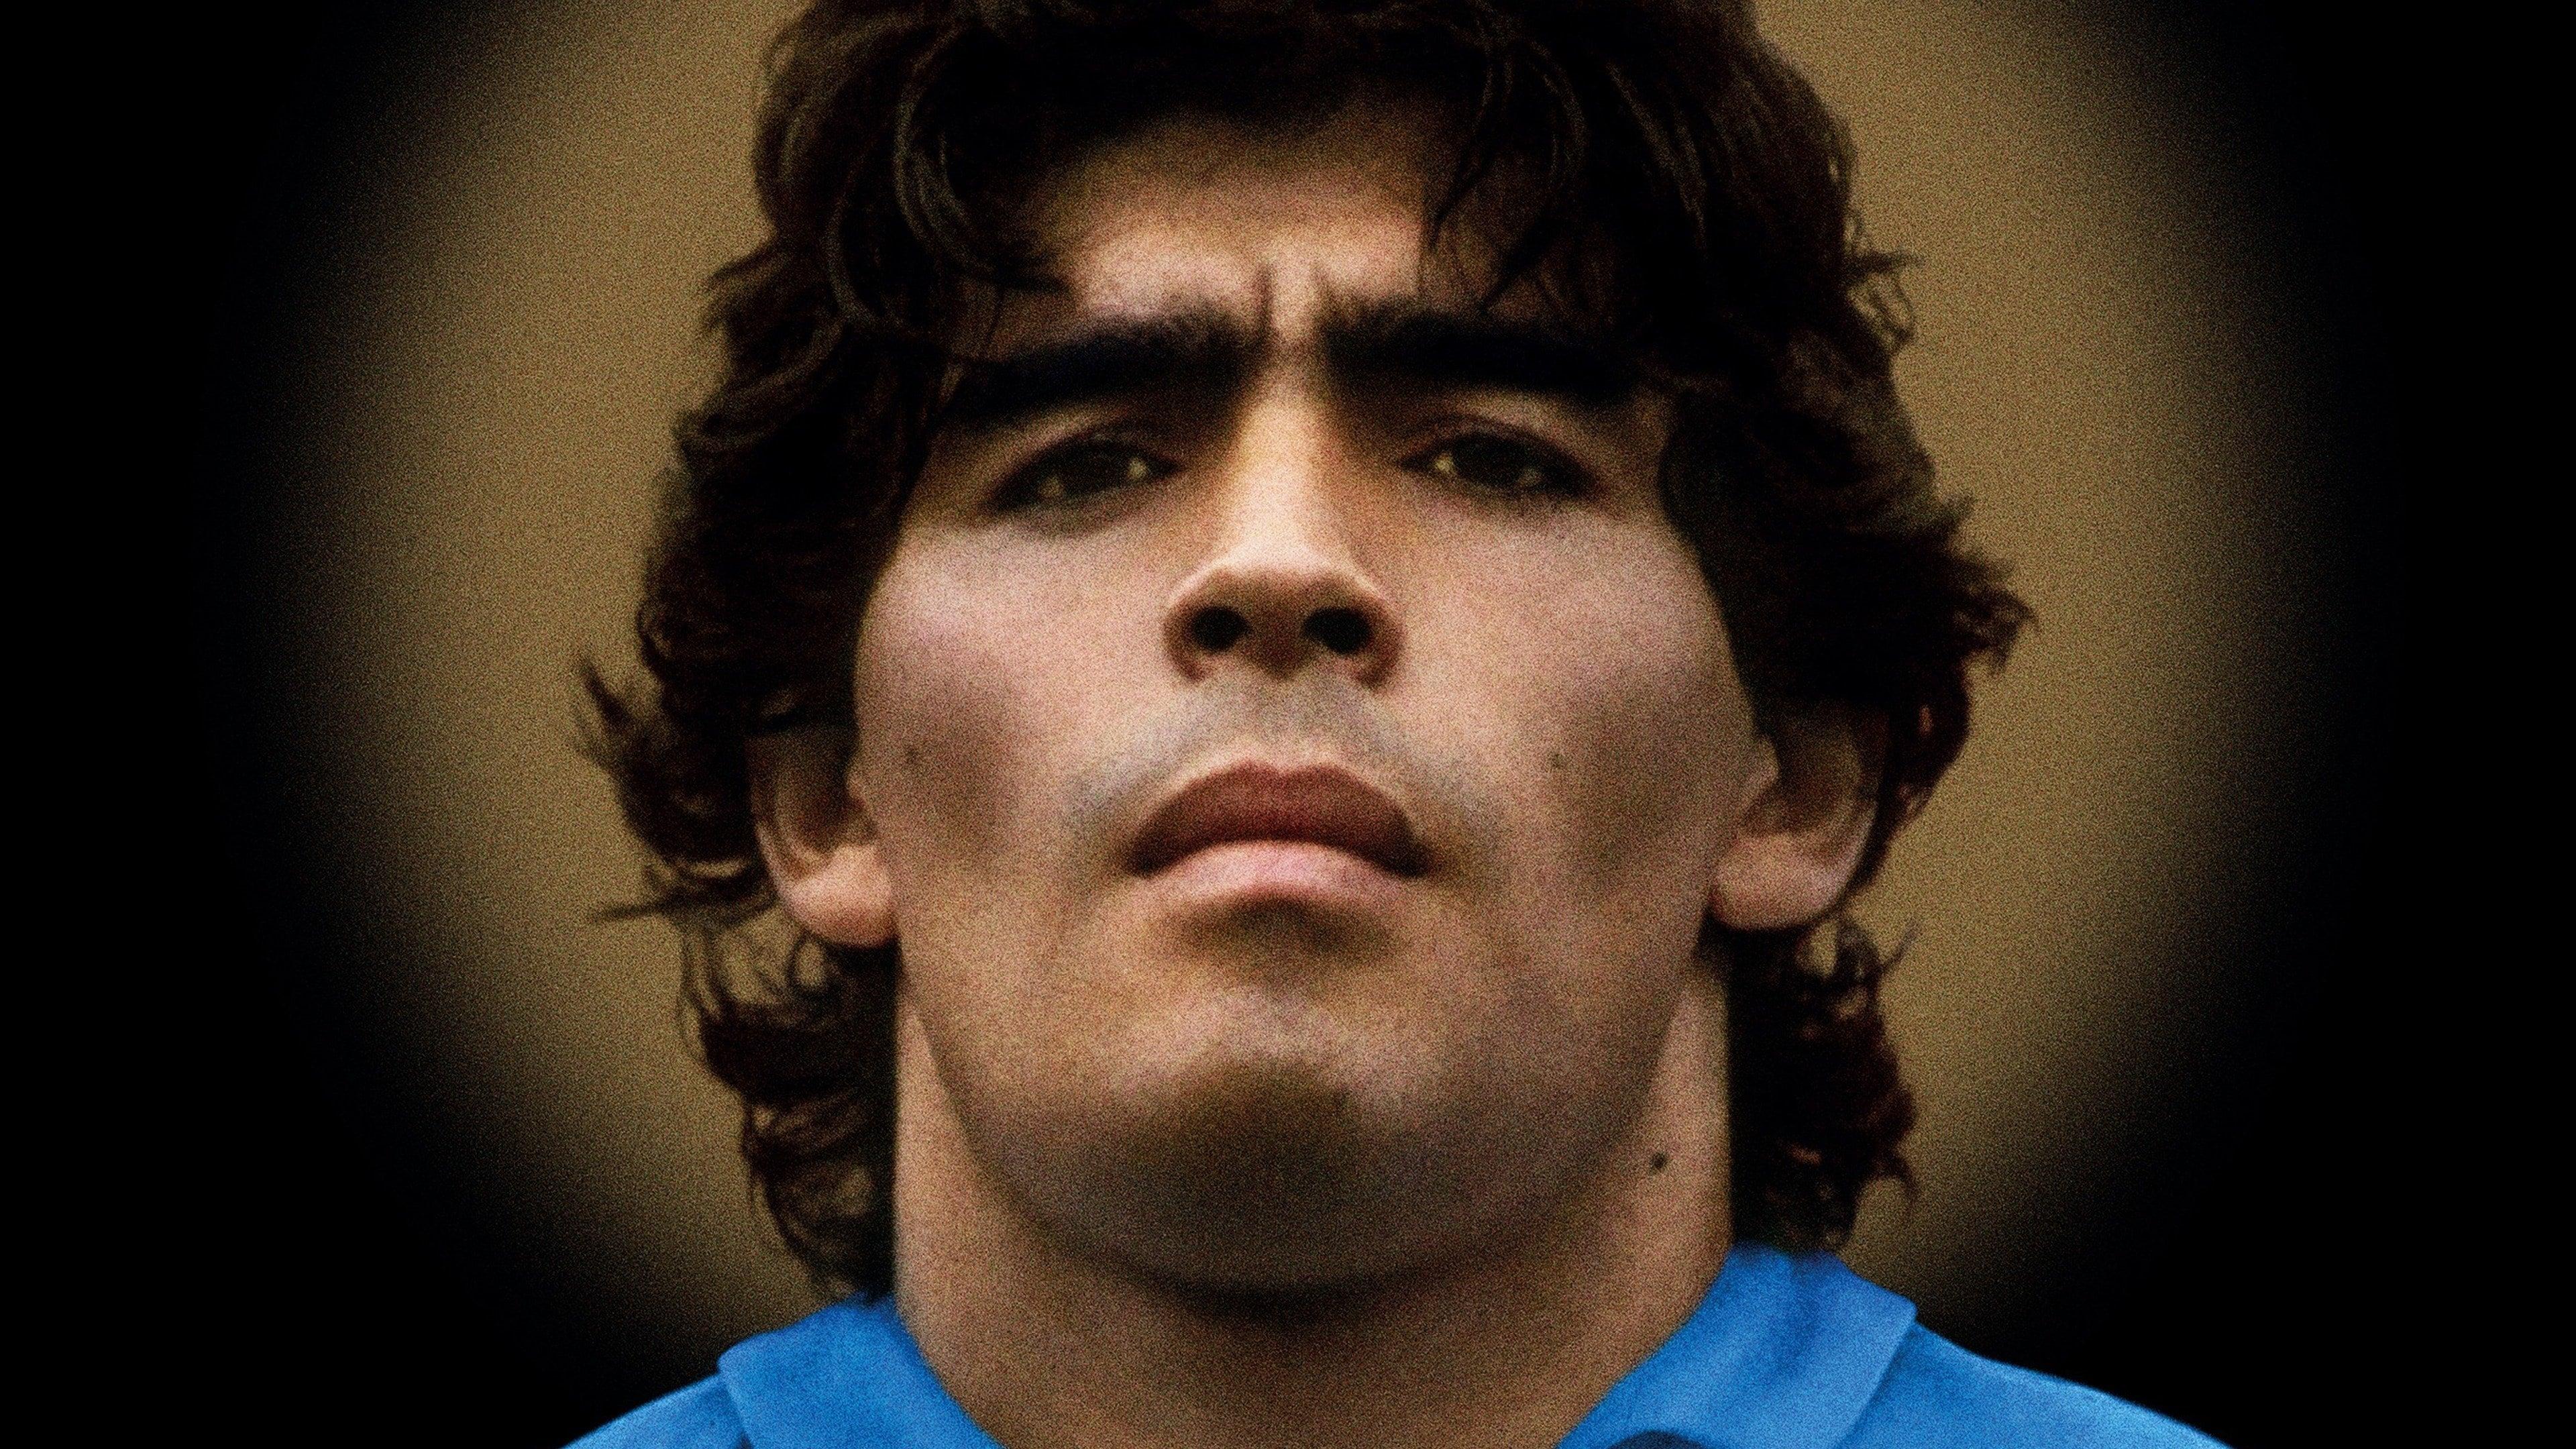 Diego Maradona backdrop